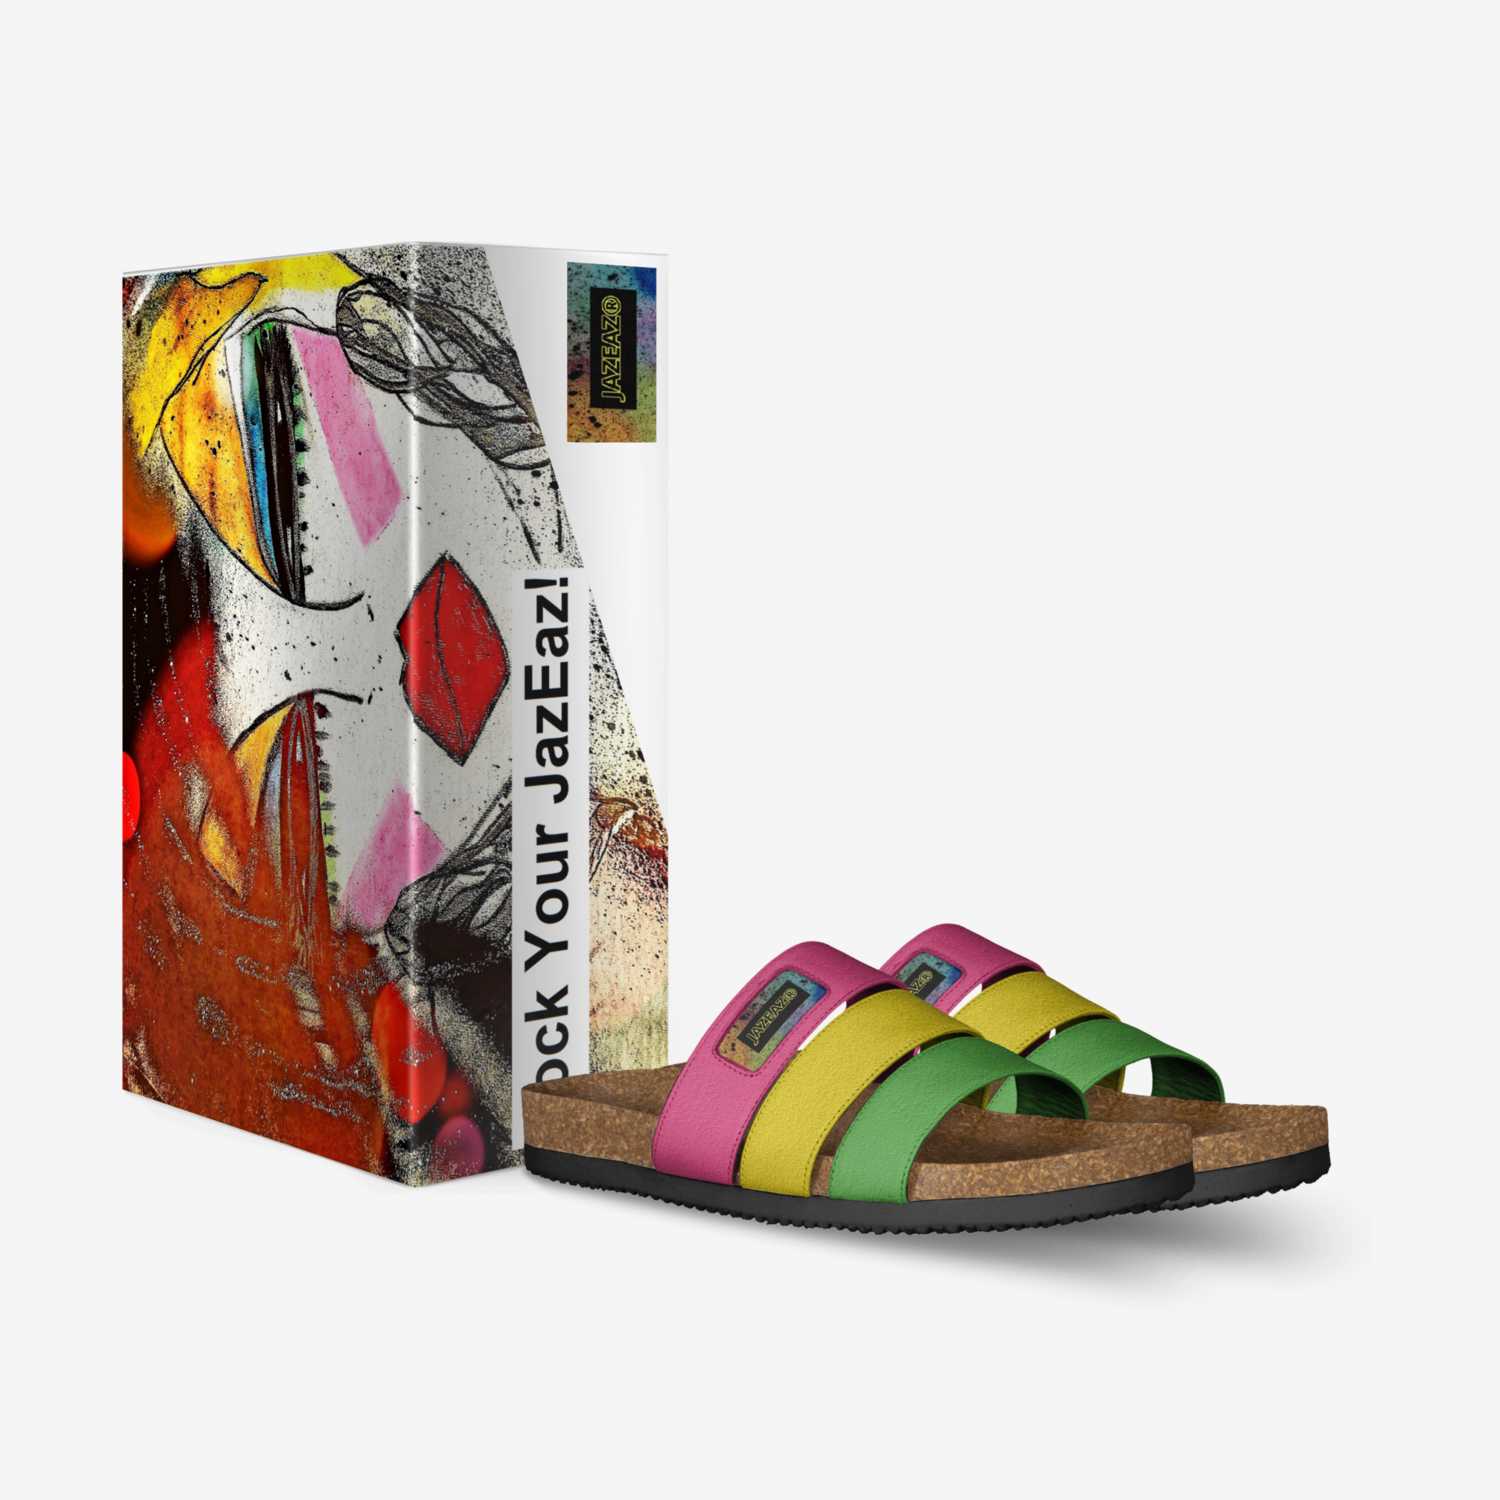 JAZEAZ custom made in Italy shoes by Chandra Clark | Box view